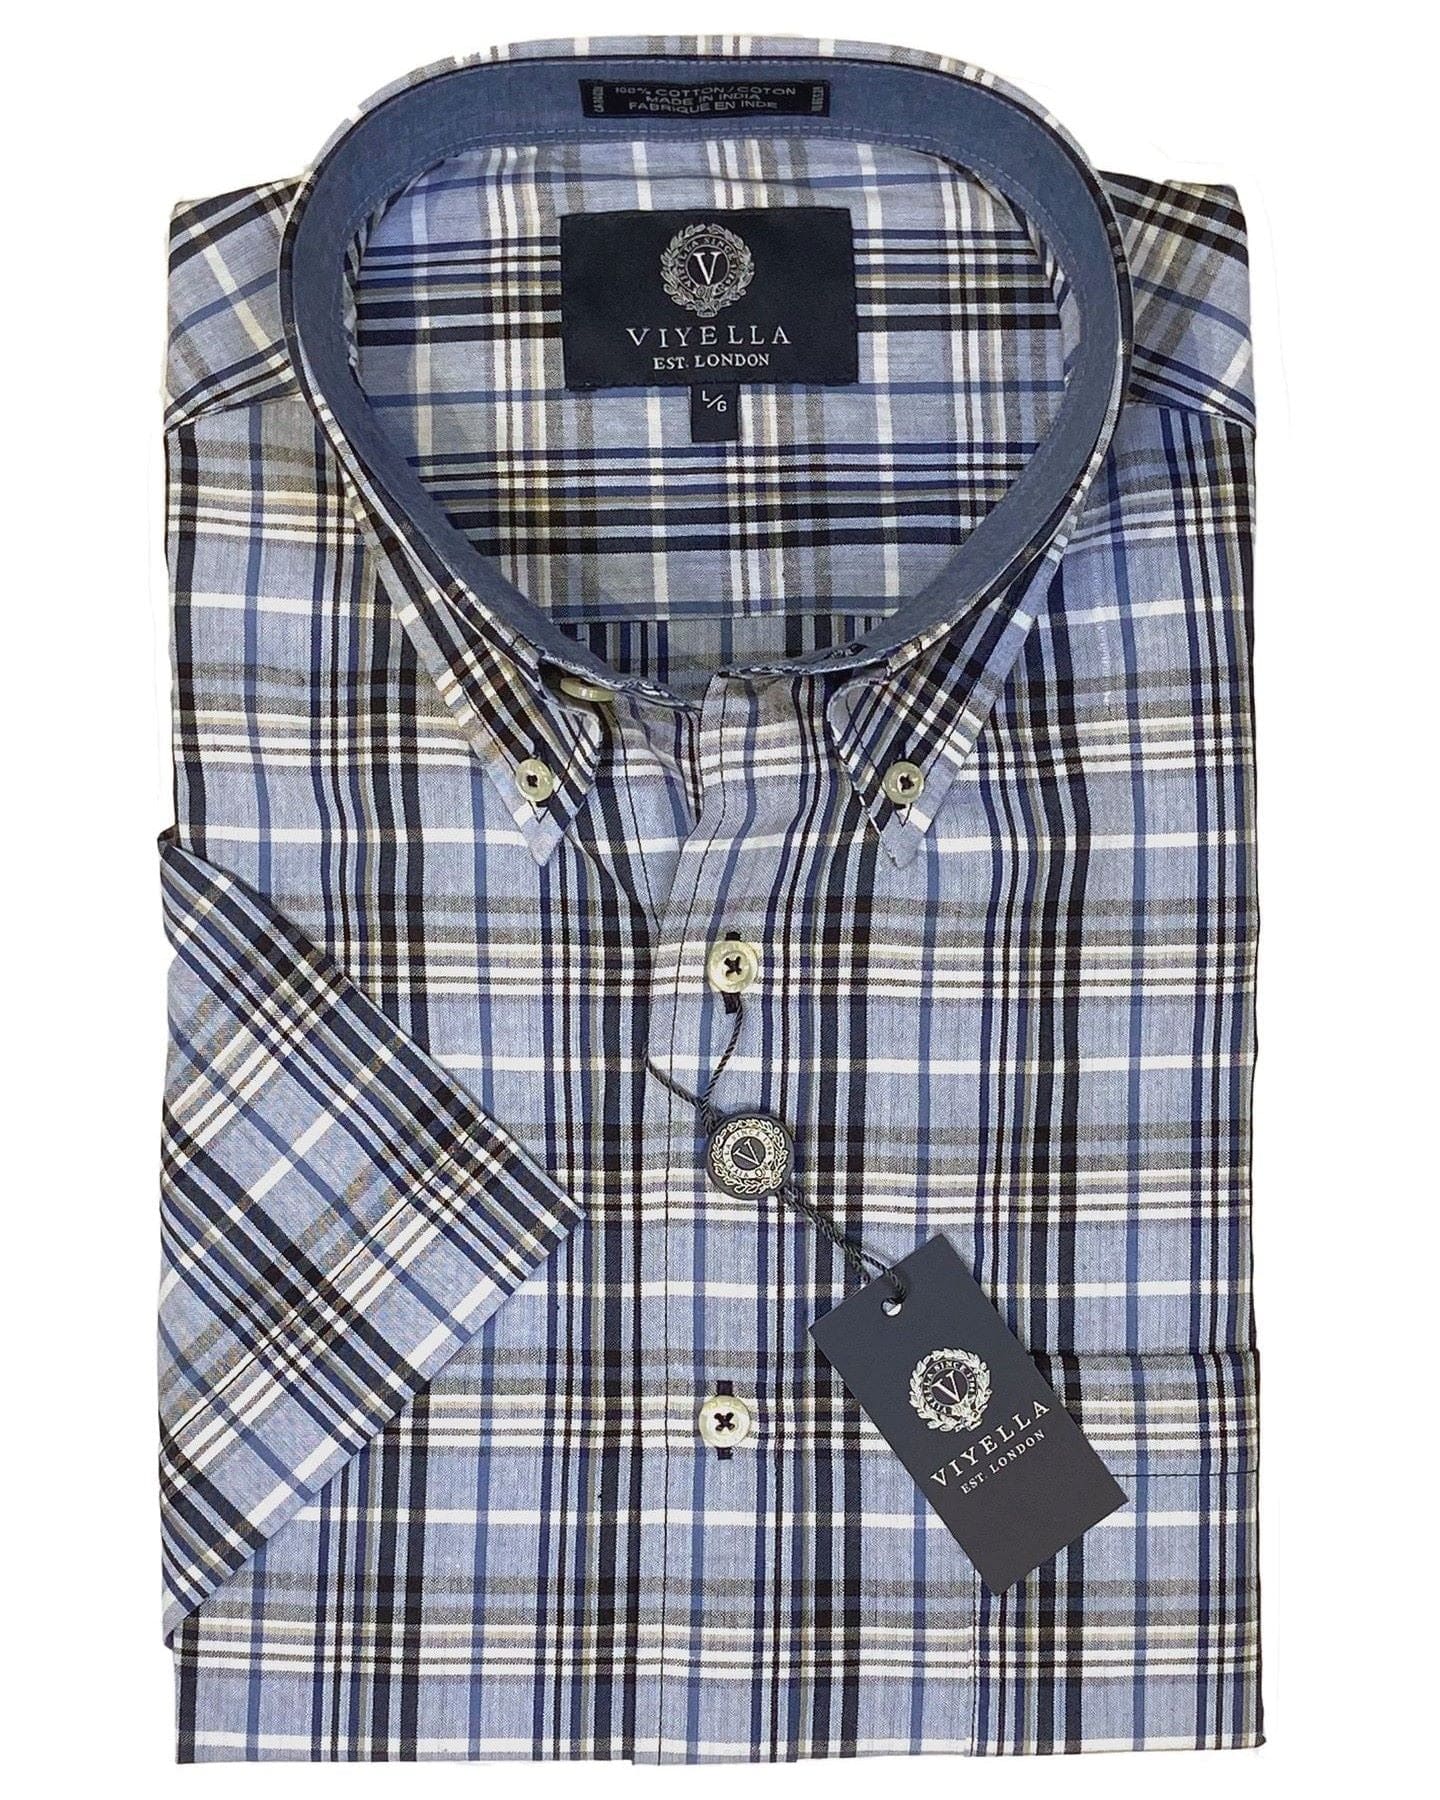 Viyella Chambray Madras Button-Down. A Men's Short Sleeve Sports Shirt Essential